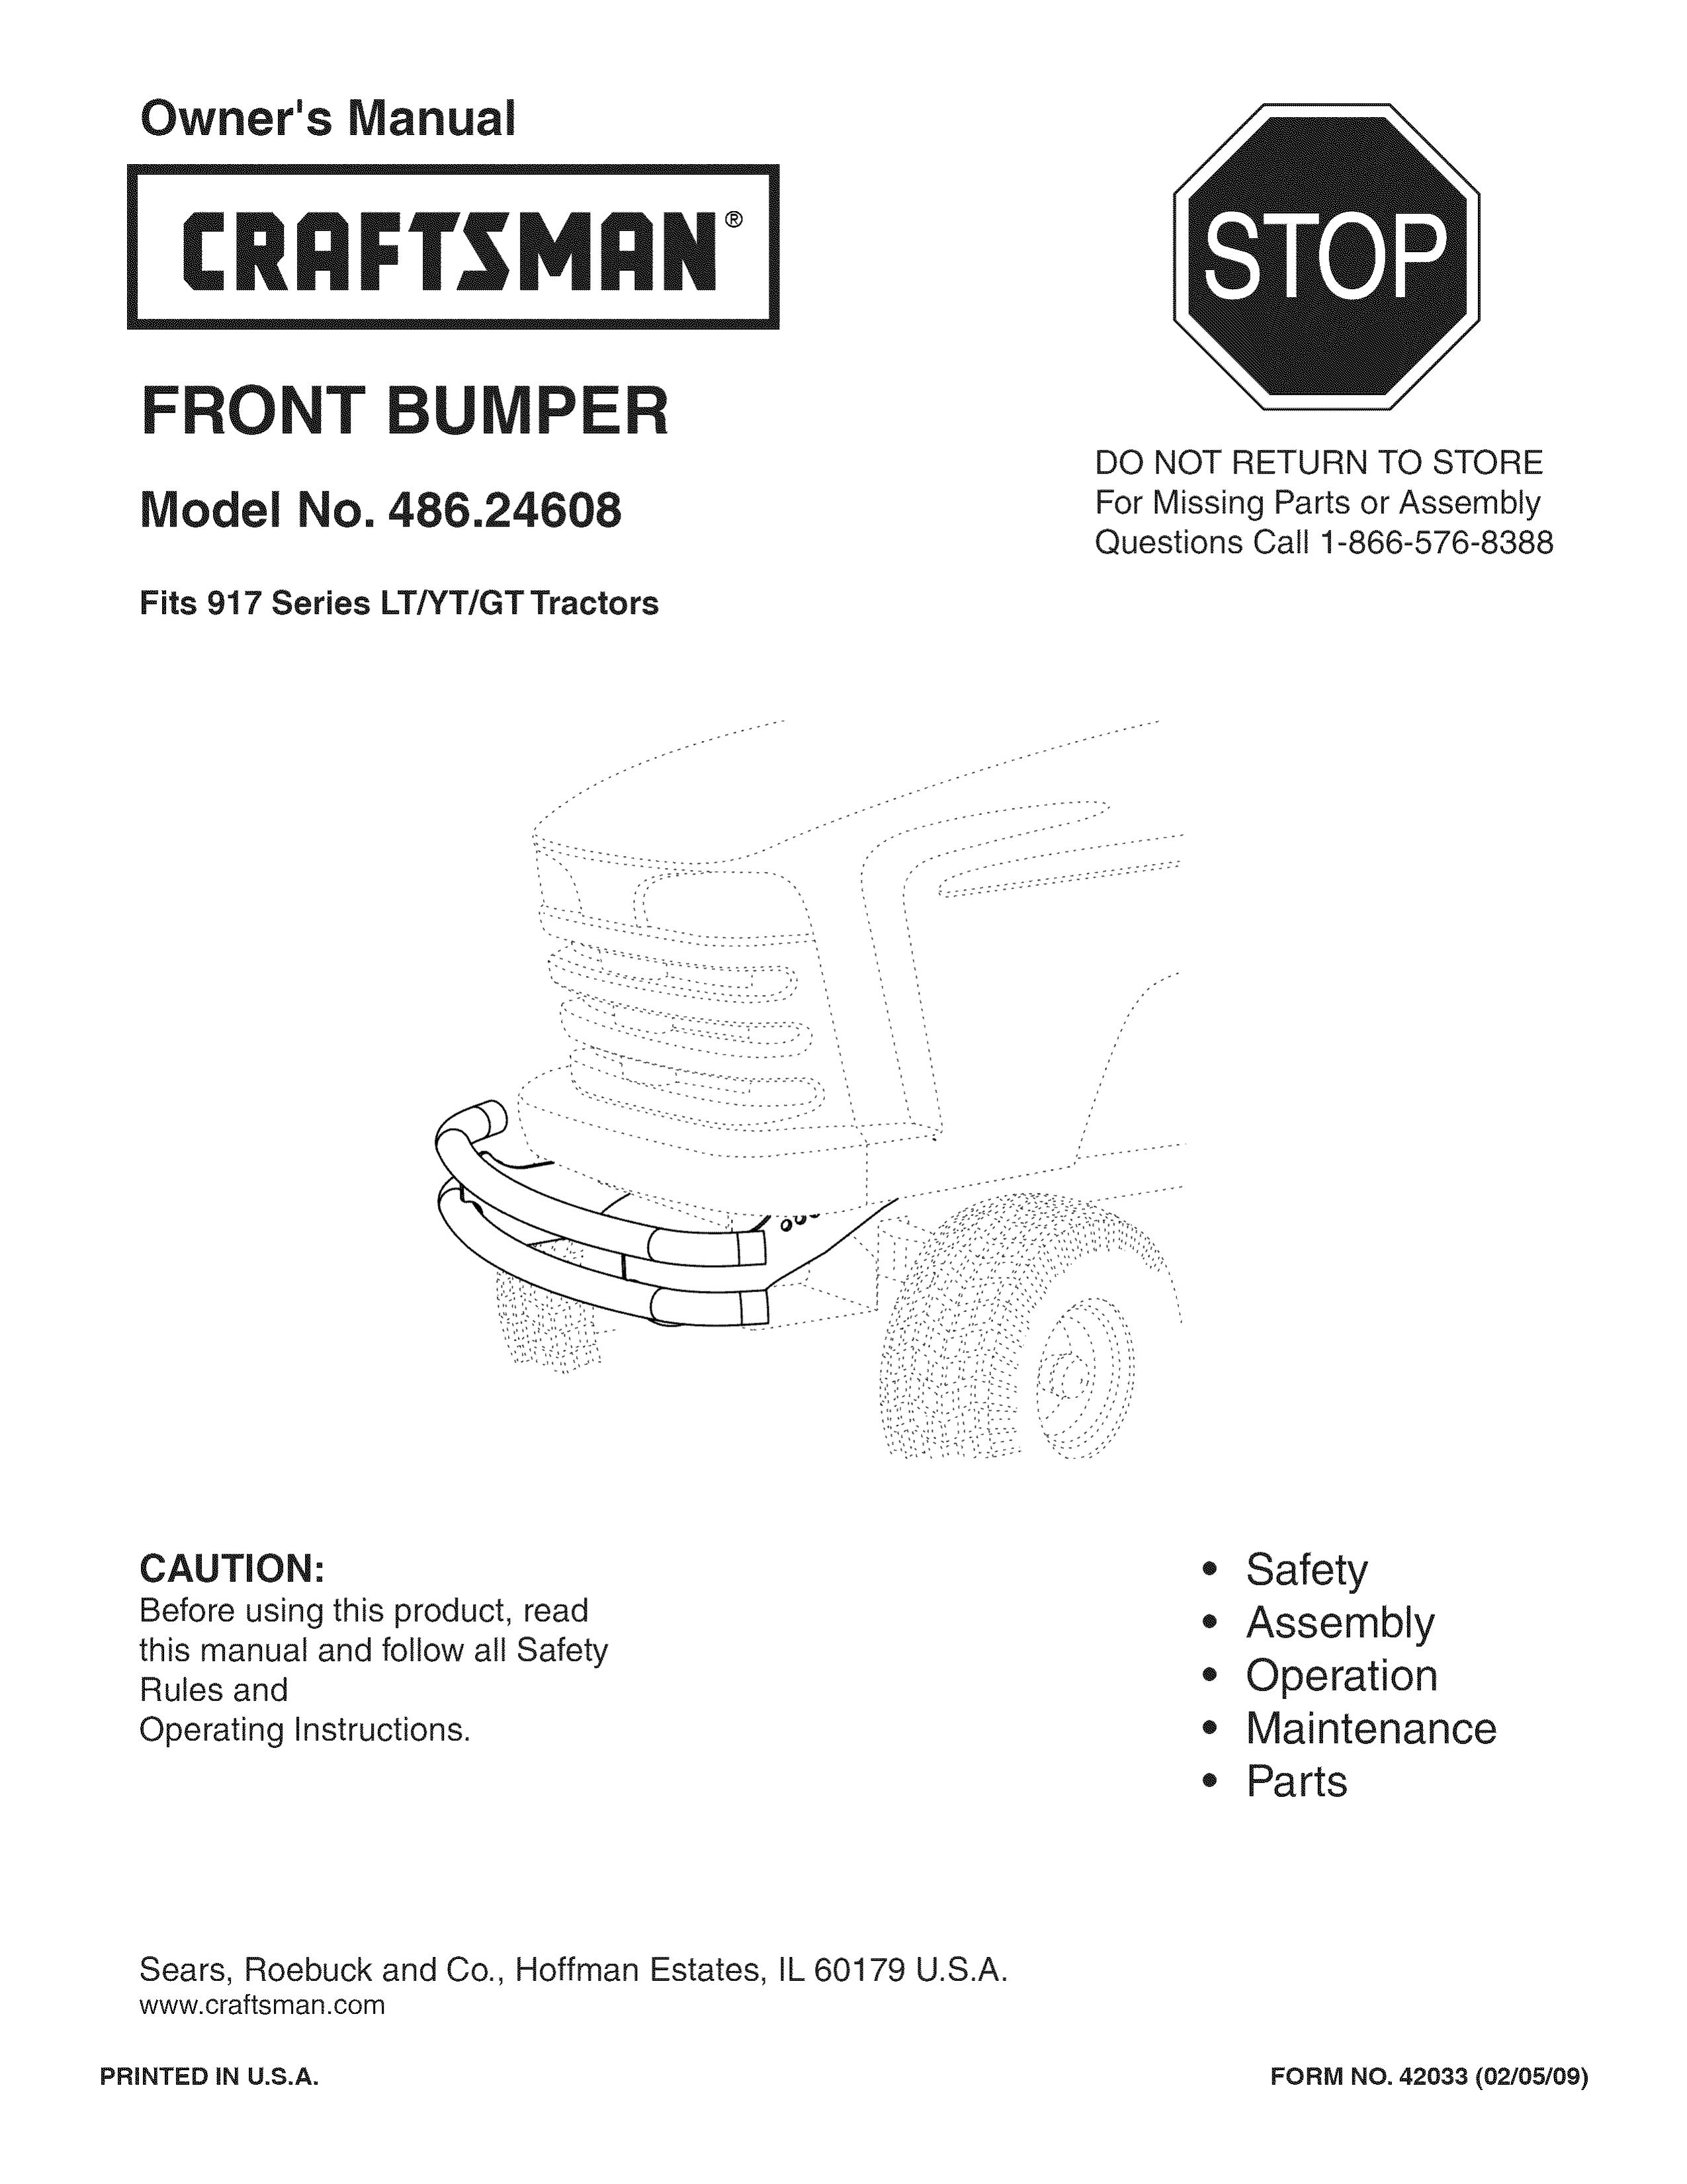 Craftsman 486.24608 Lawn Mower Accessory User Manual